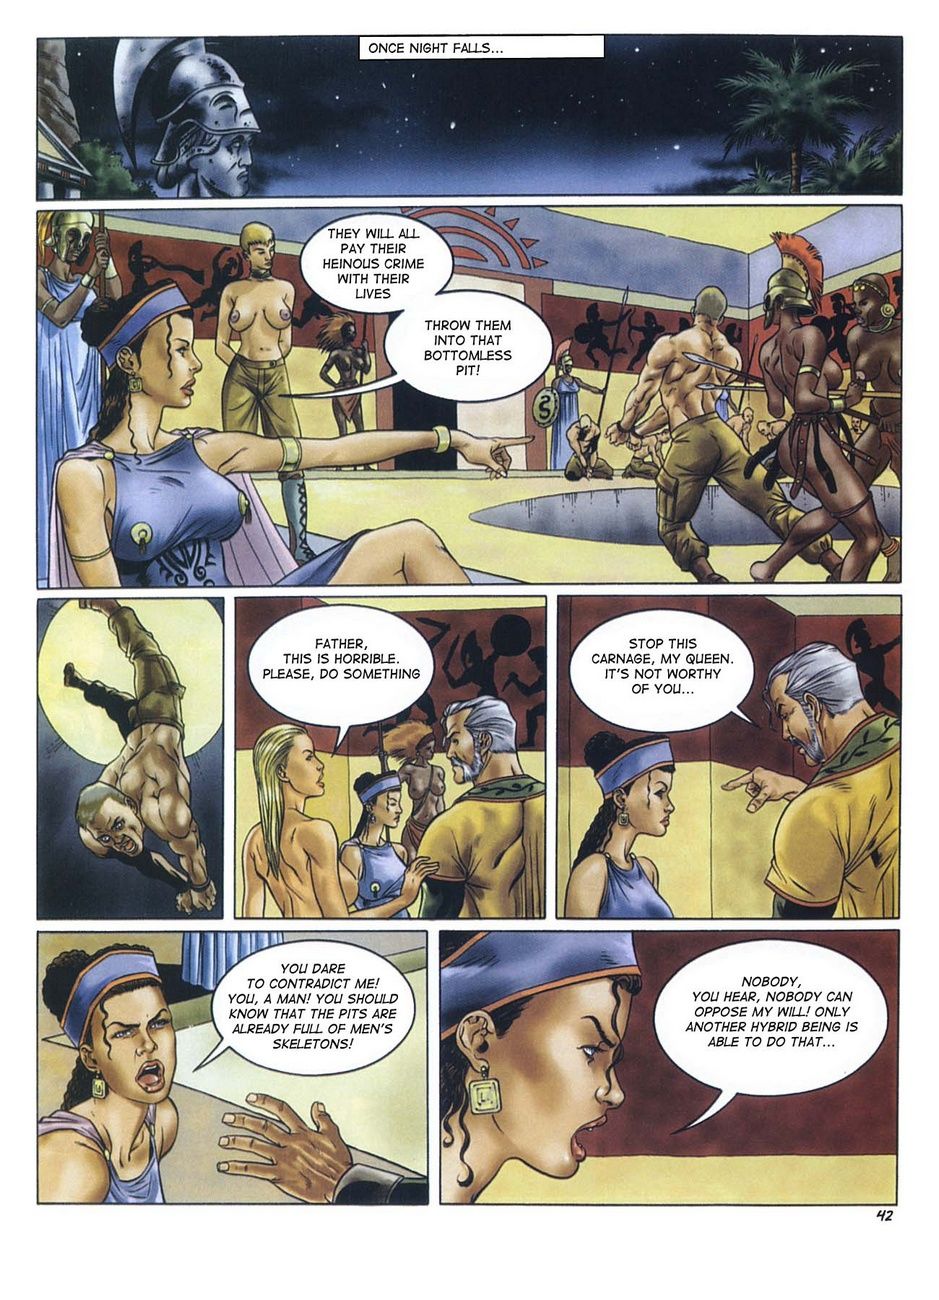 Lara Jones 1 il amazzoni parte 3 page 1